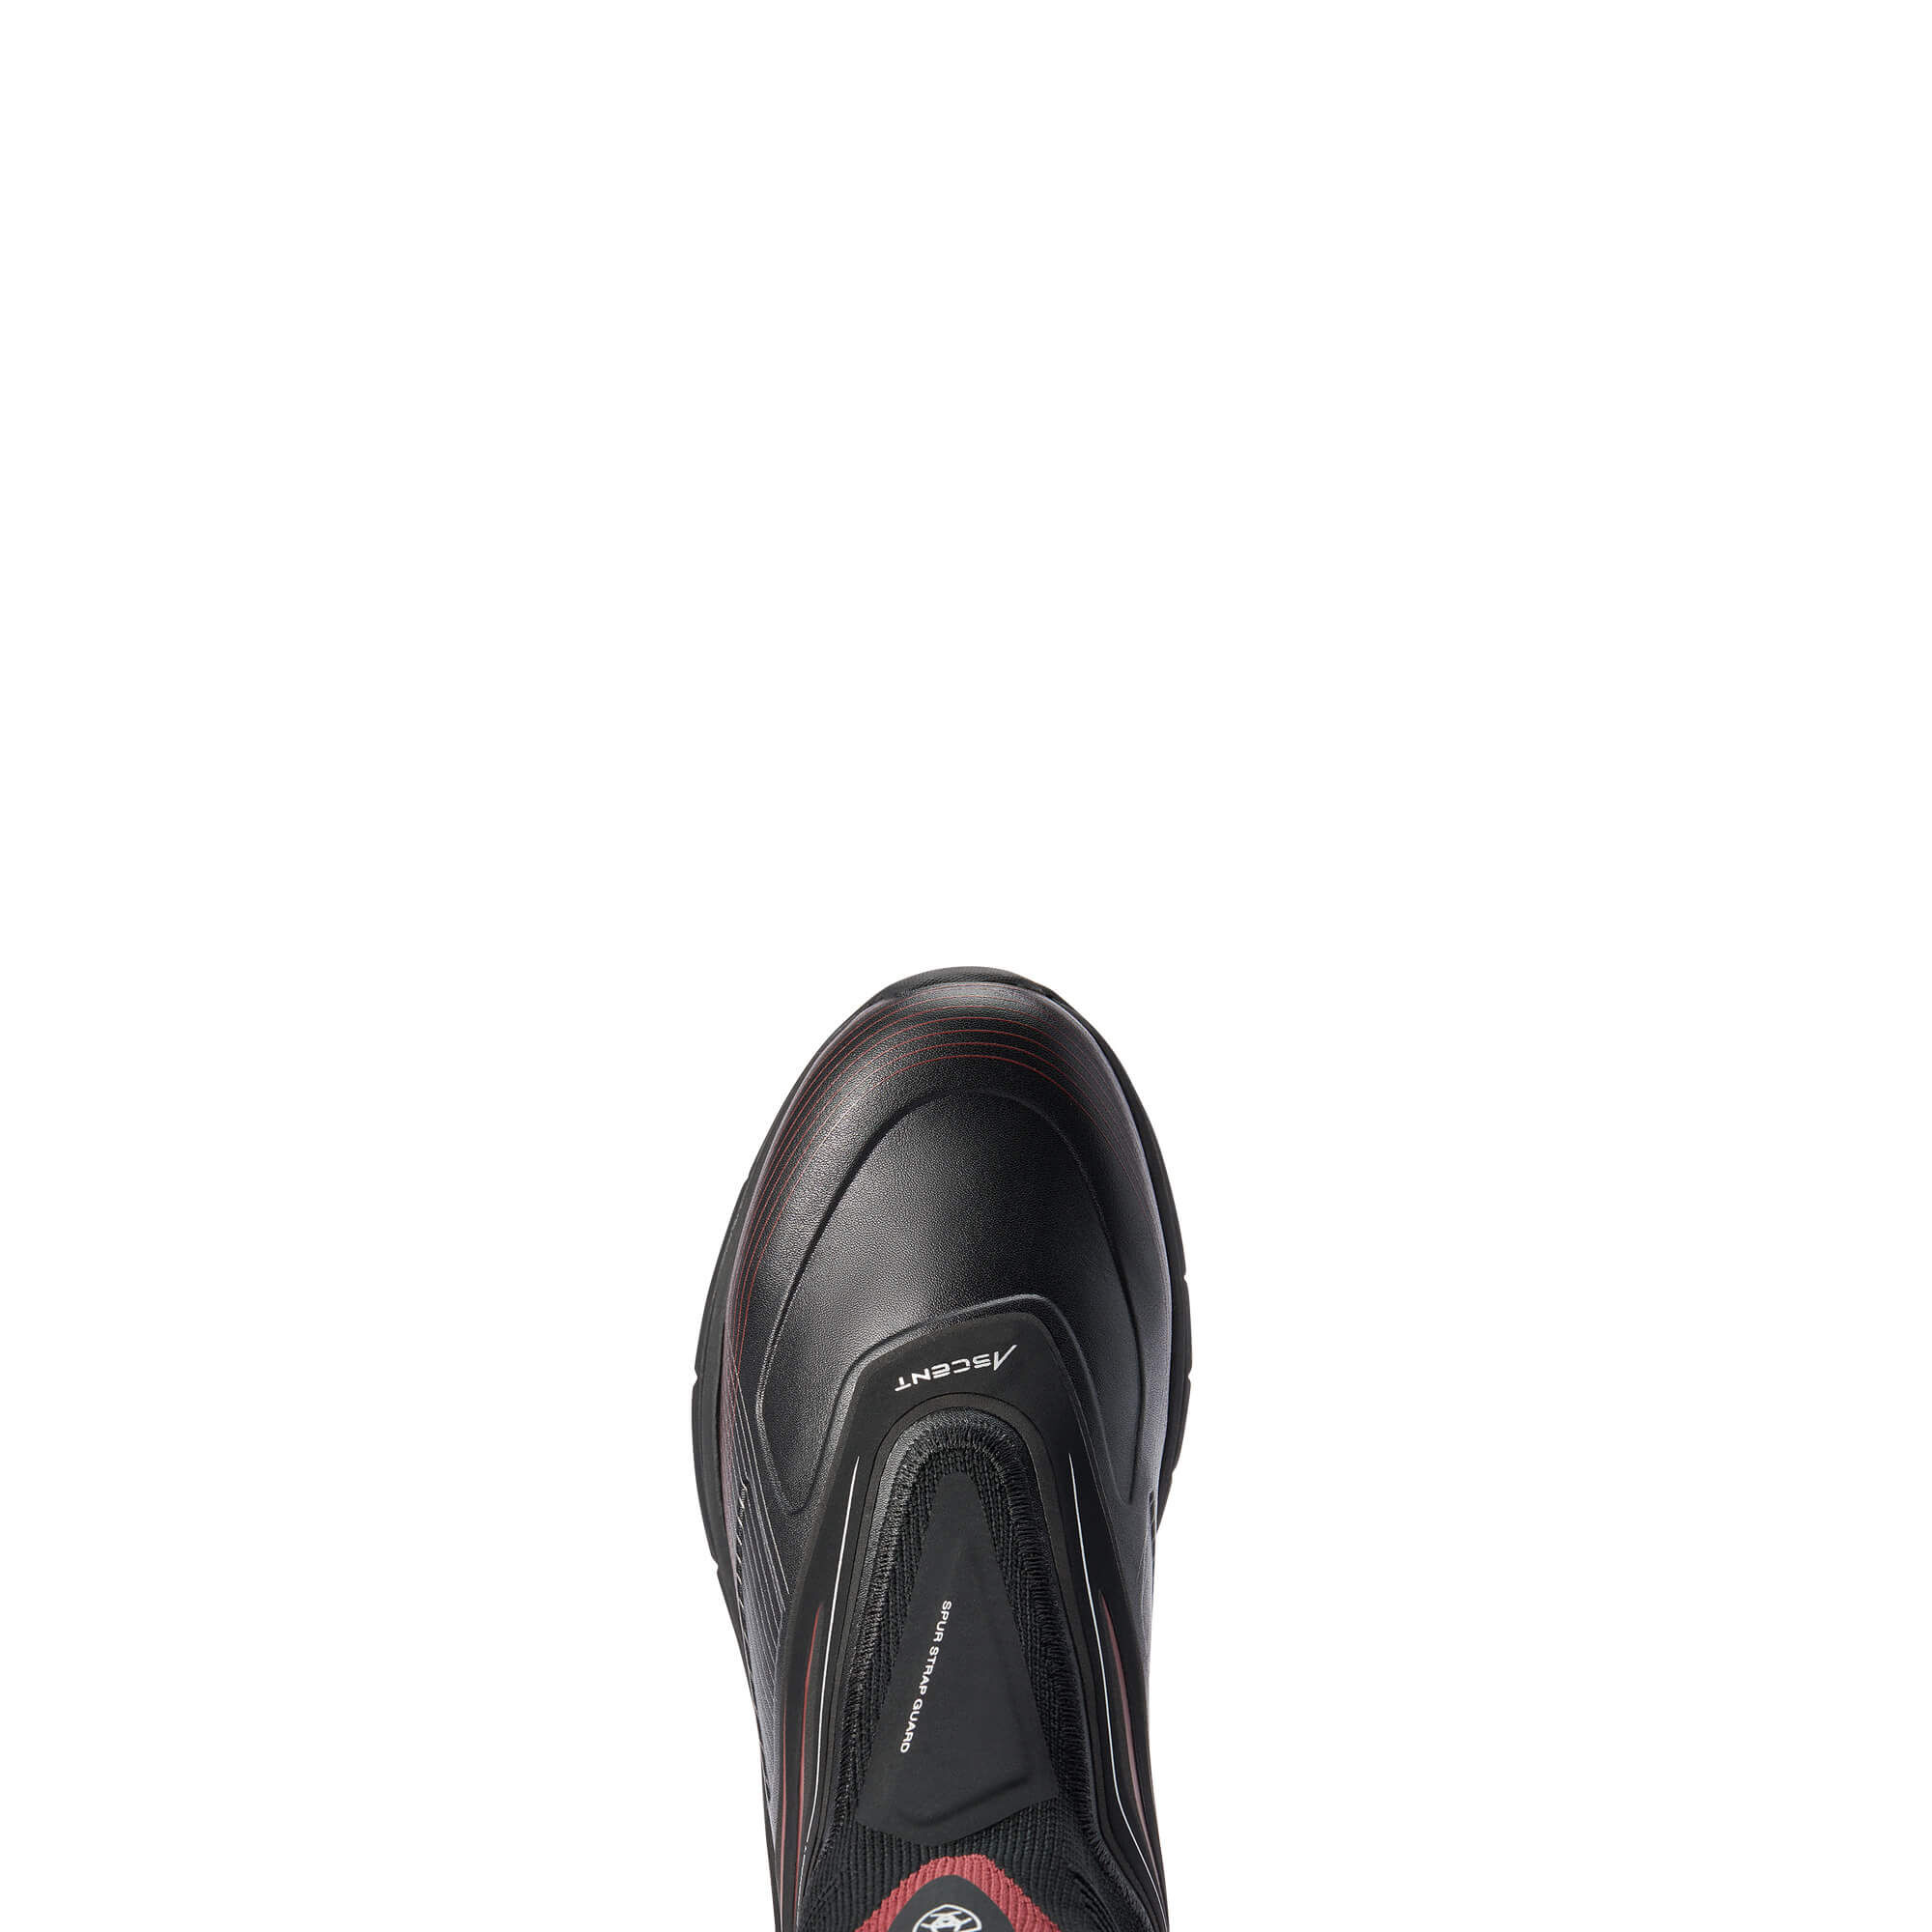 Sizes 4.5 to 7 UK Black Ariat Ascent Women's Paddock Jodhpur Boots 